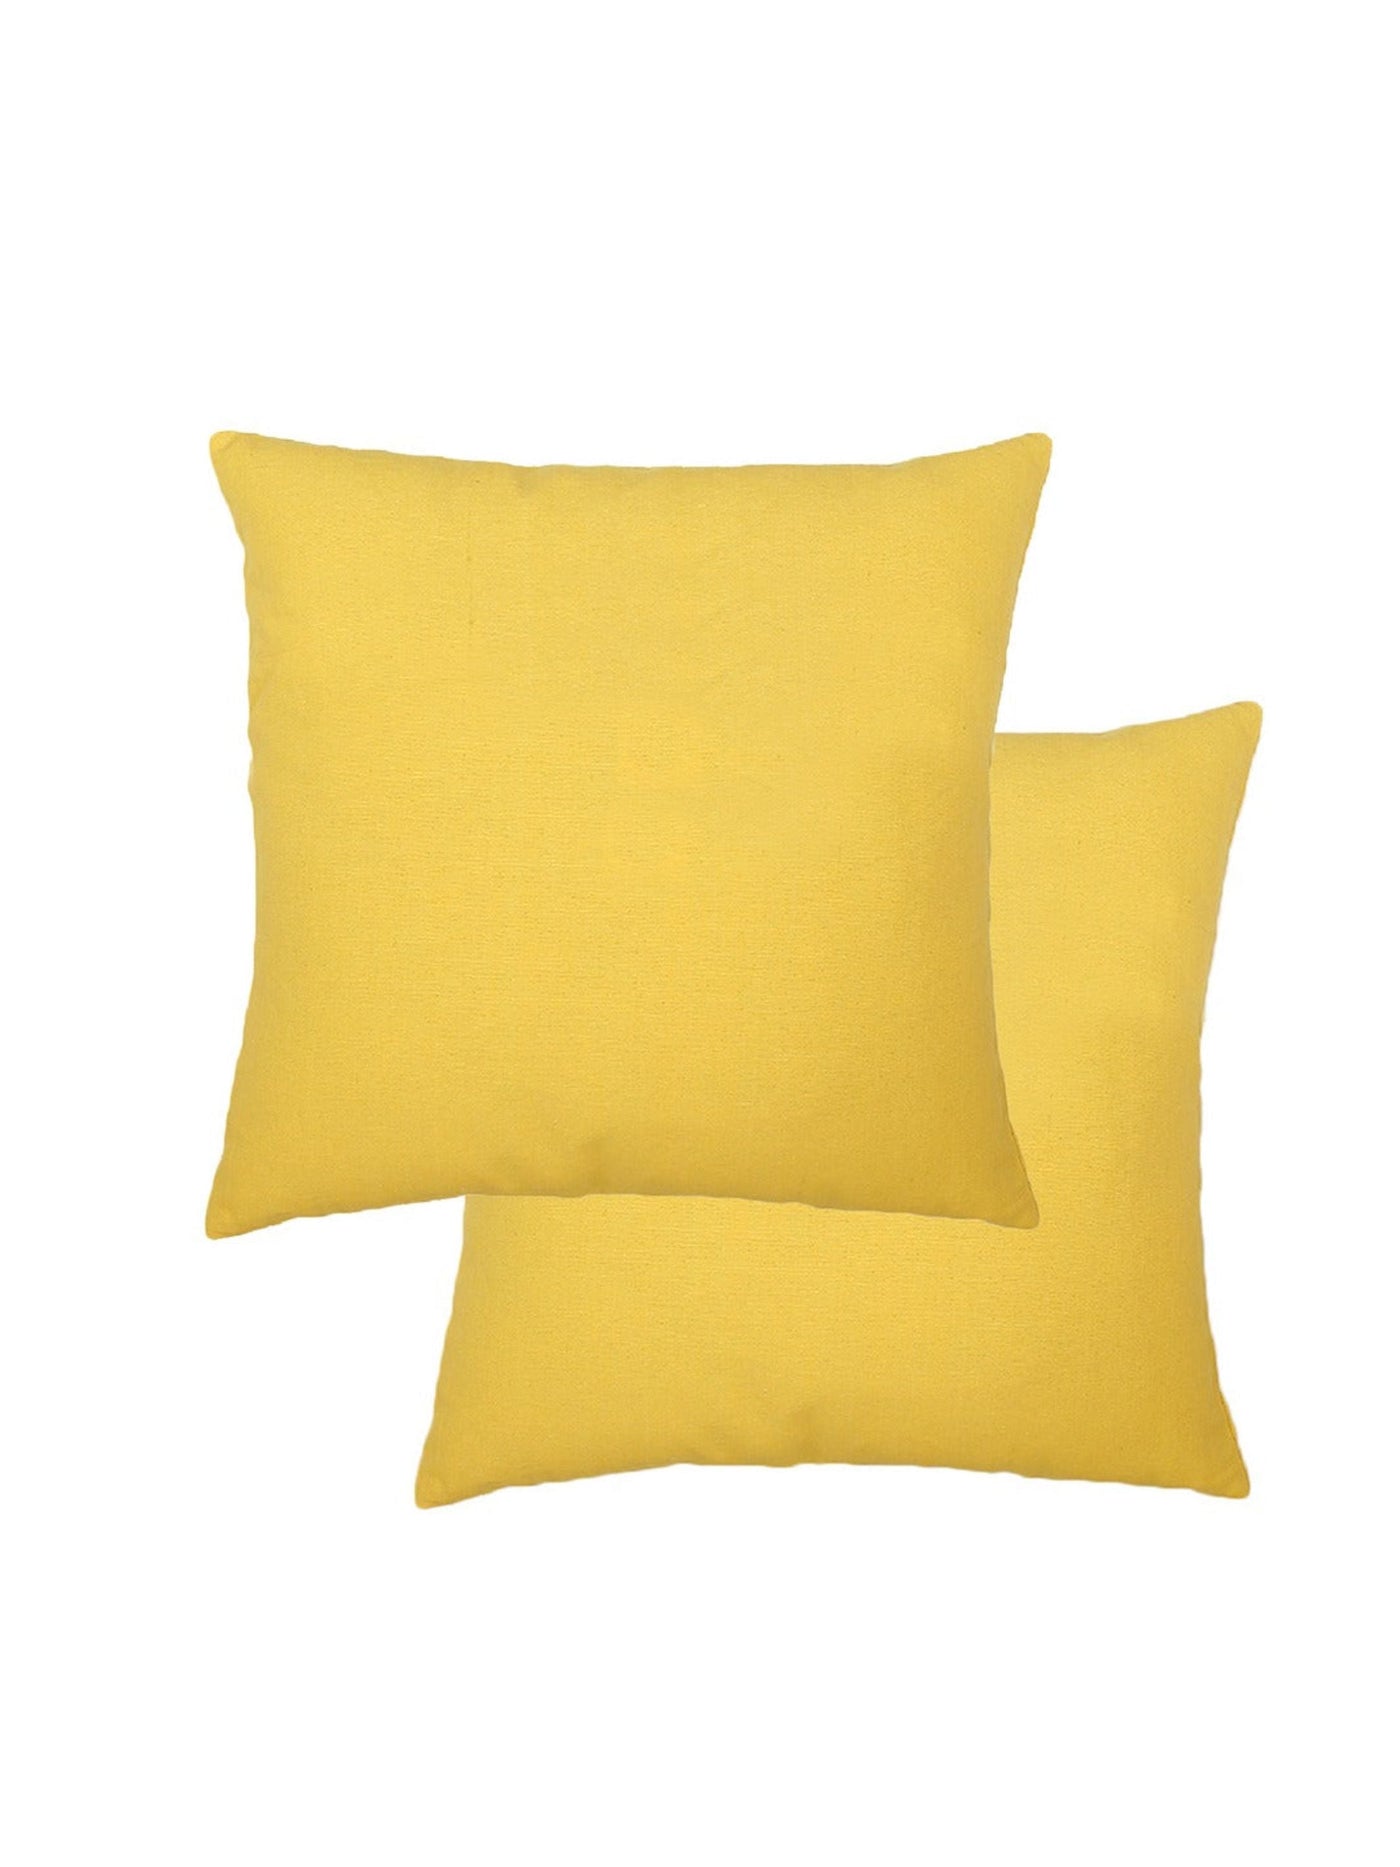 2 Cushion Covers - 2 s-8903773000937